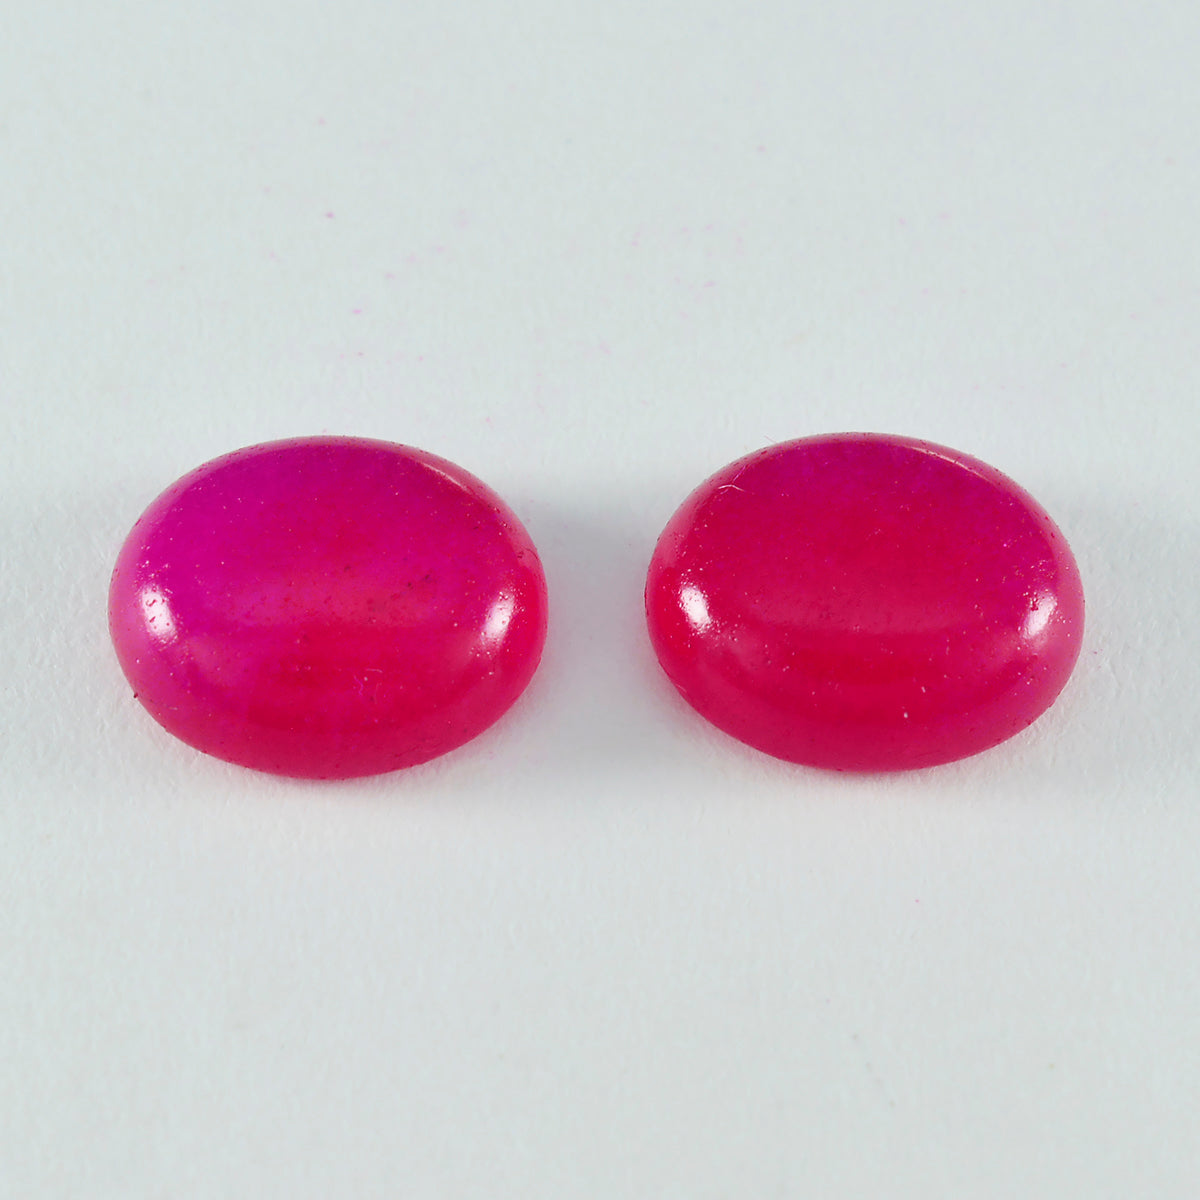 riyogems 1 cabujón de jaspe rojo de 8x10 mm, forma ovalada, piedra preciosa suelta de calidad A1